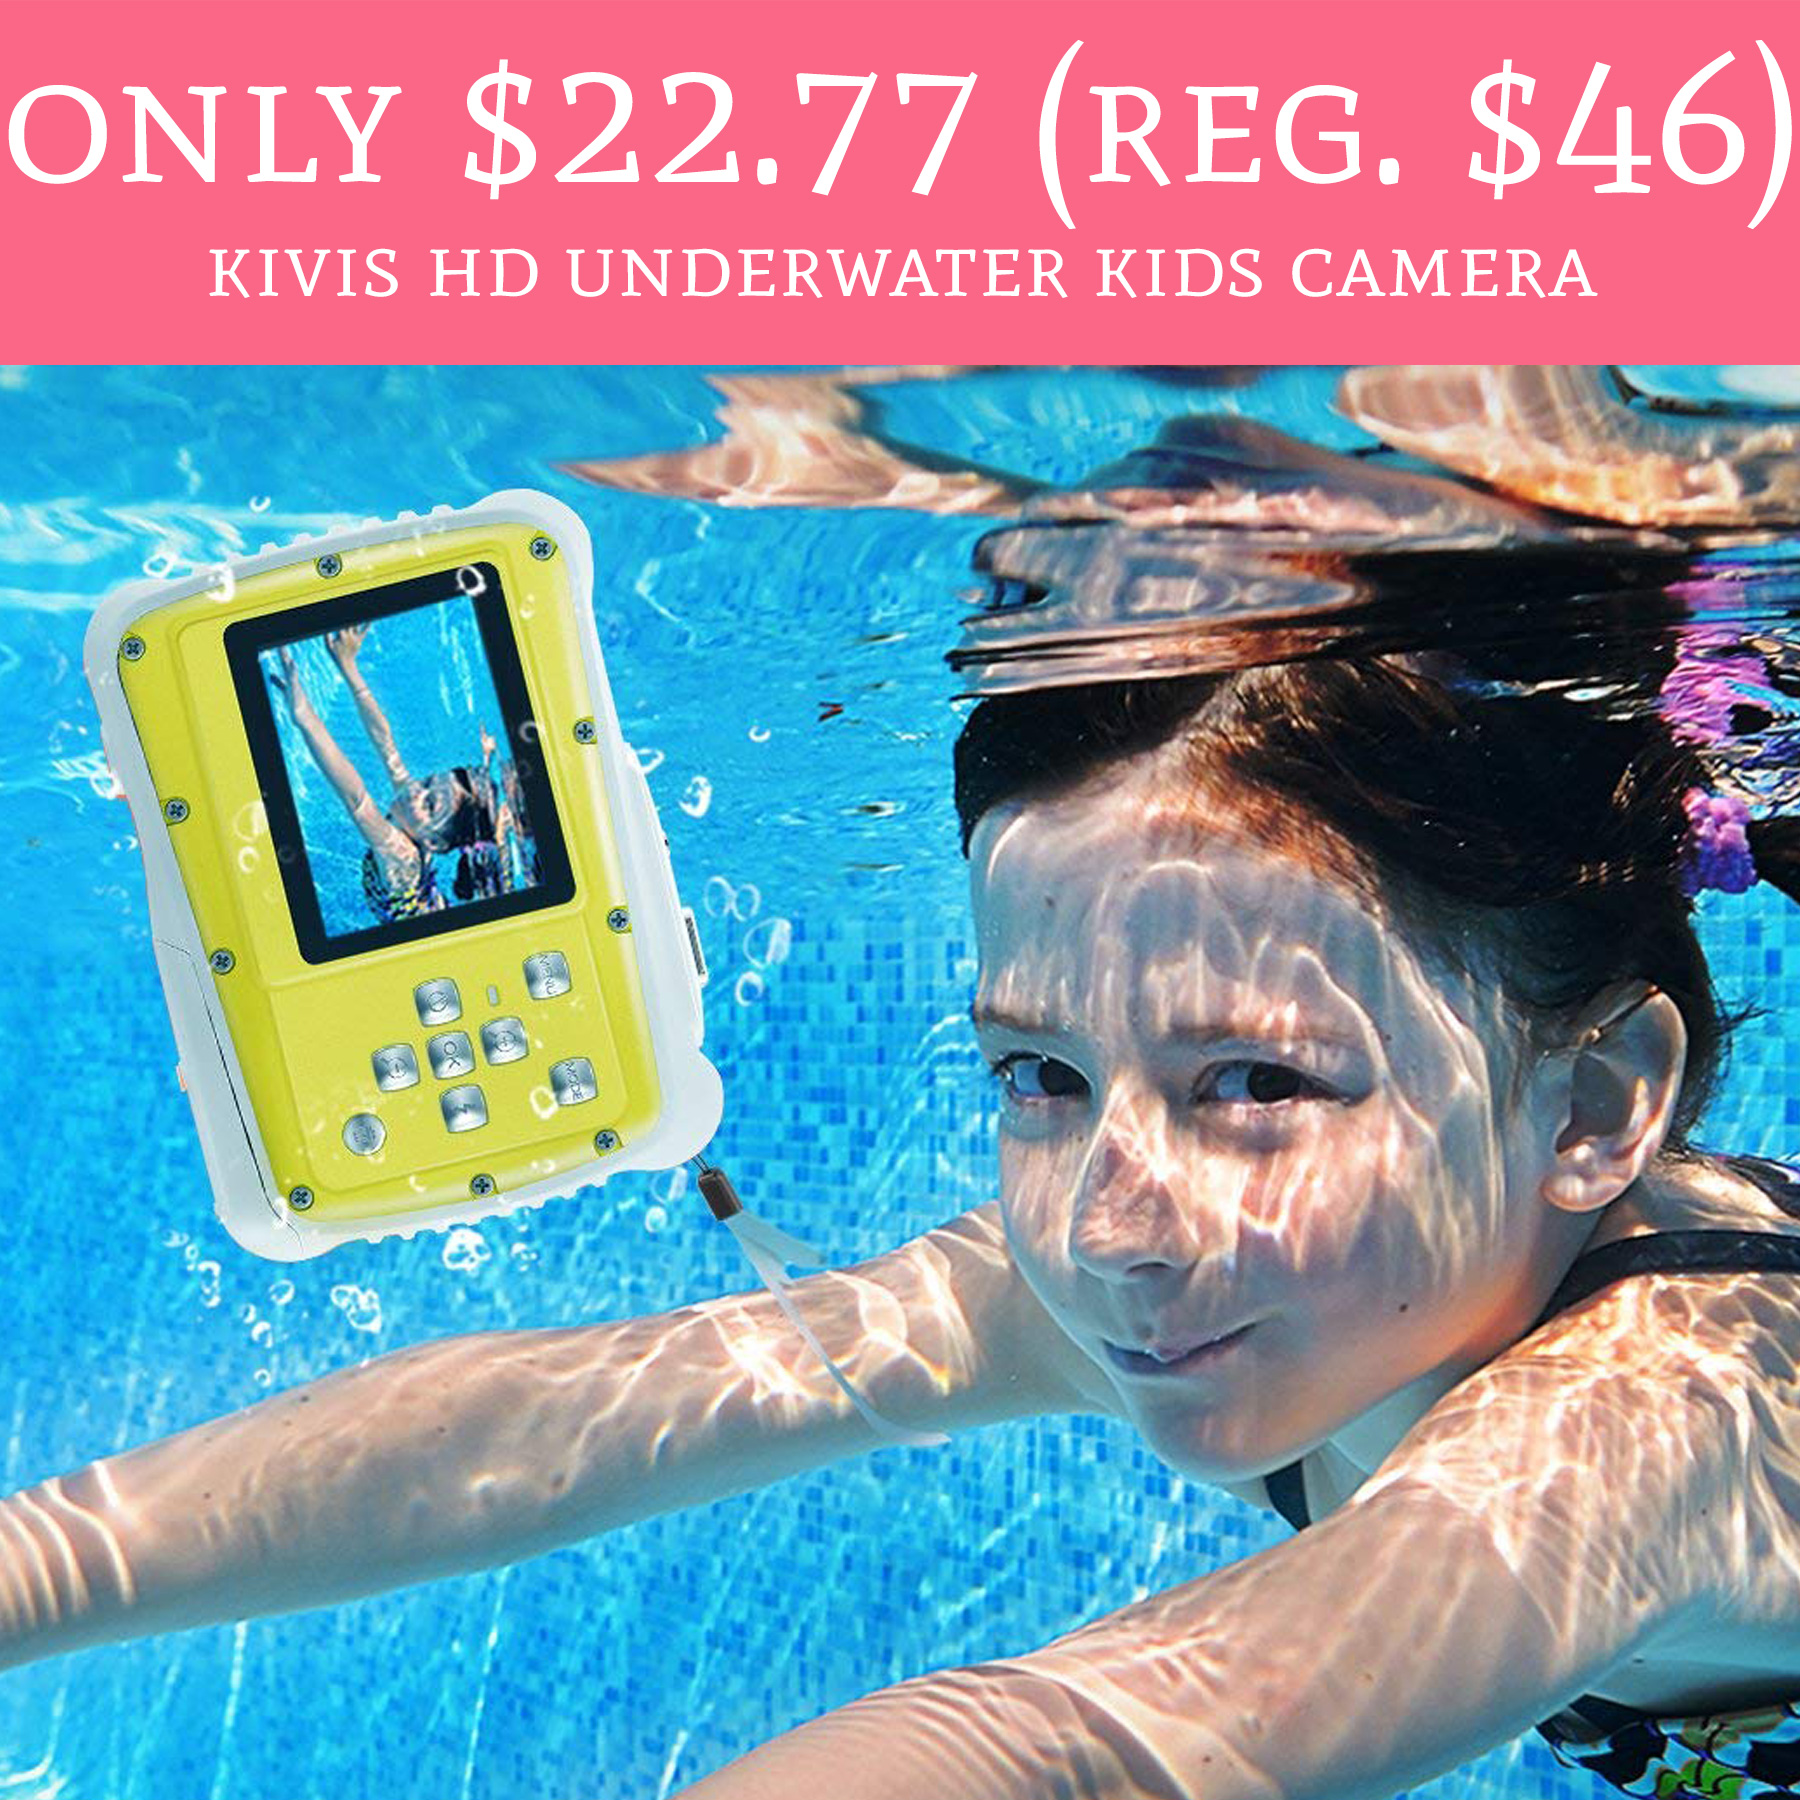 kivis-hd-underwater-kids-camera